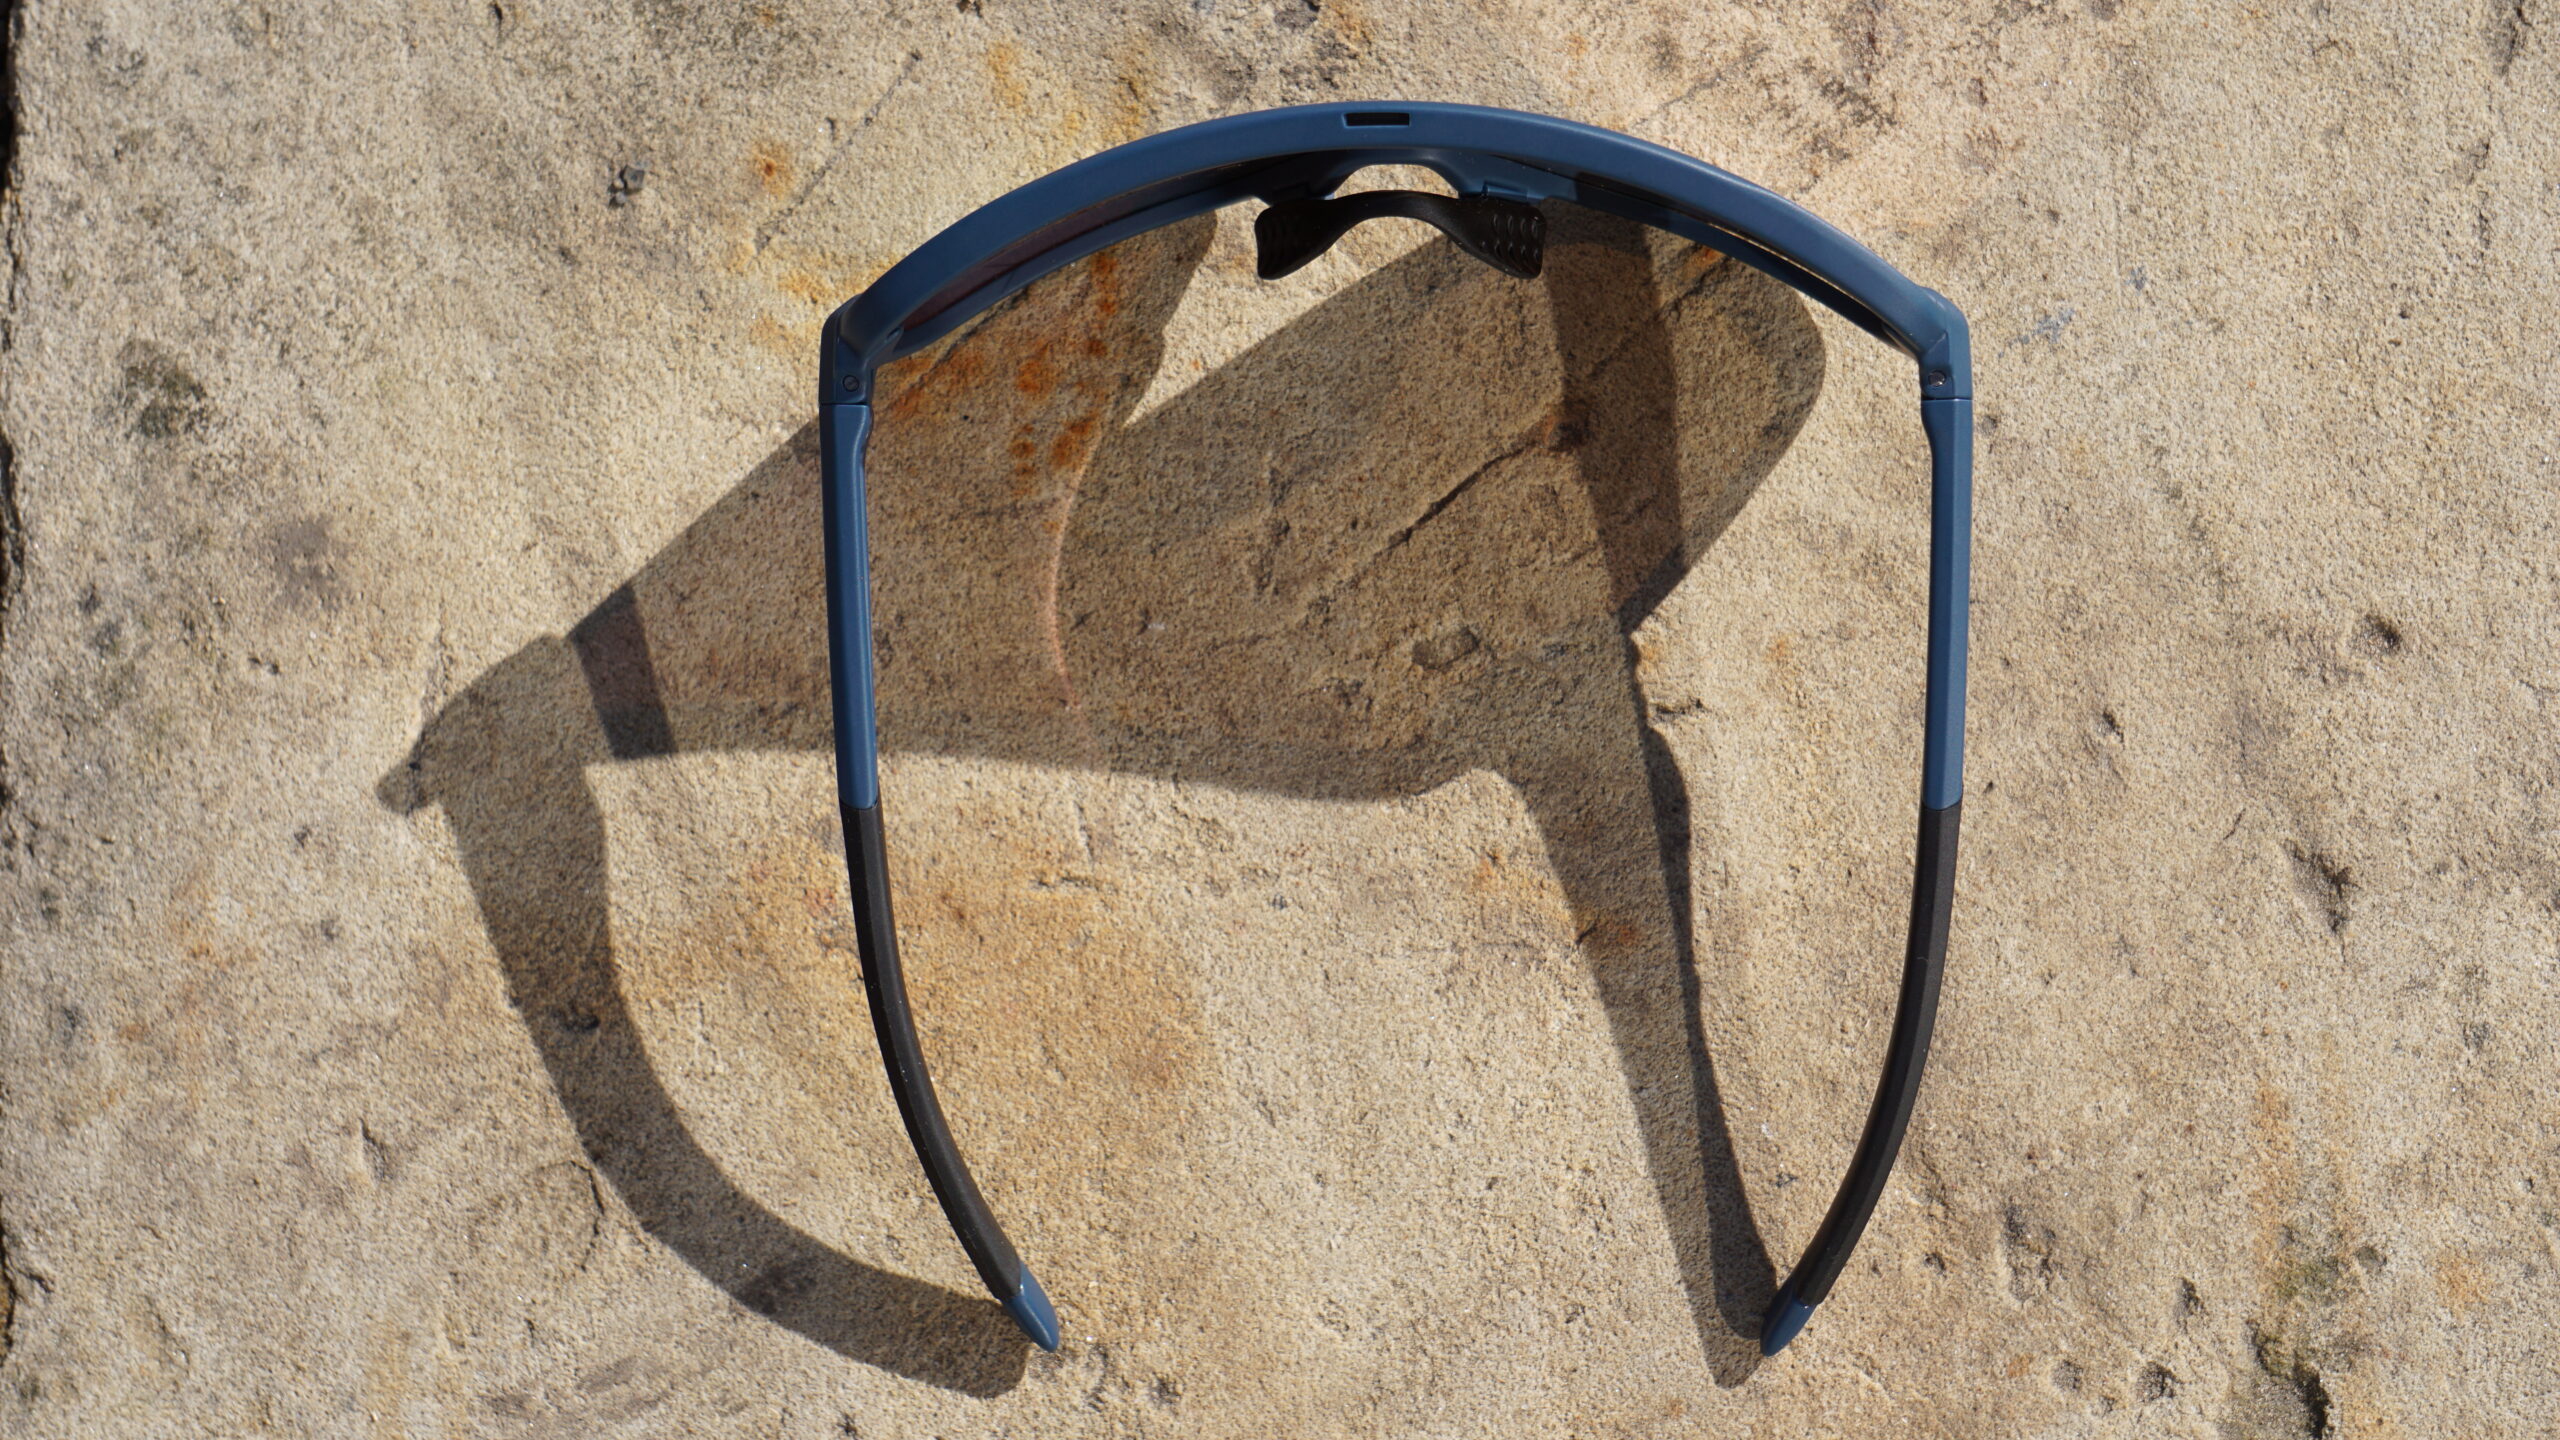 Viris Raptor Riding Glasses review - Sunglasses - Sunglasses and